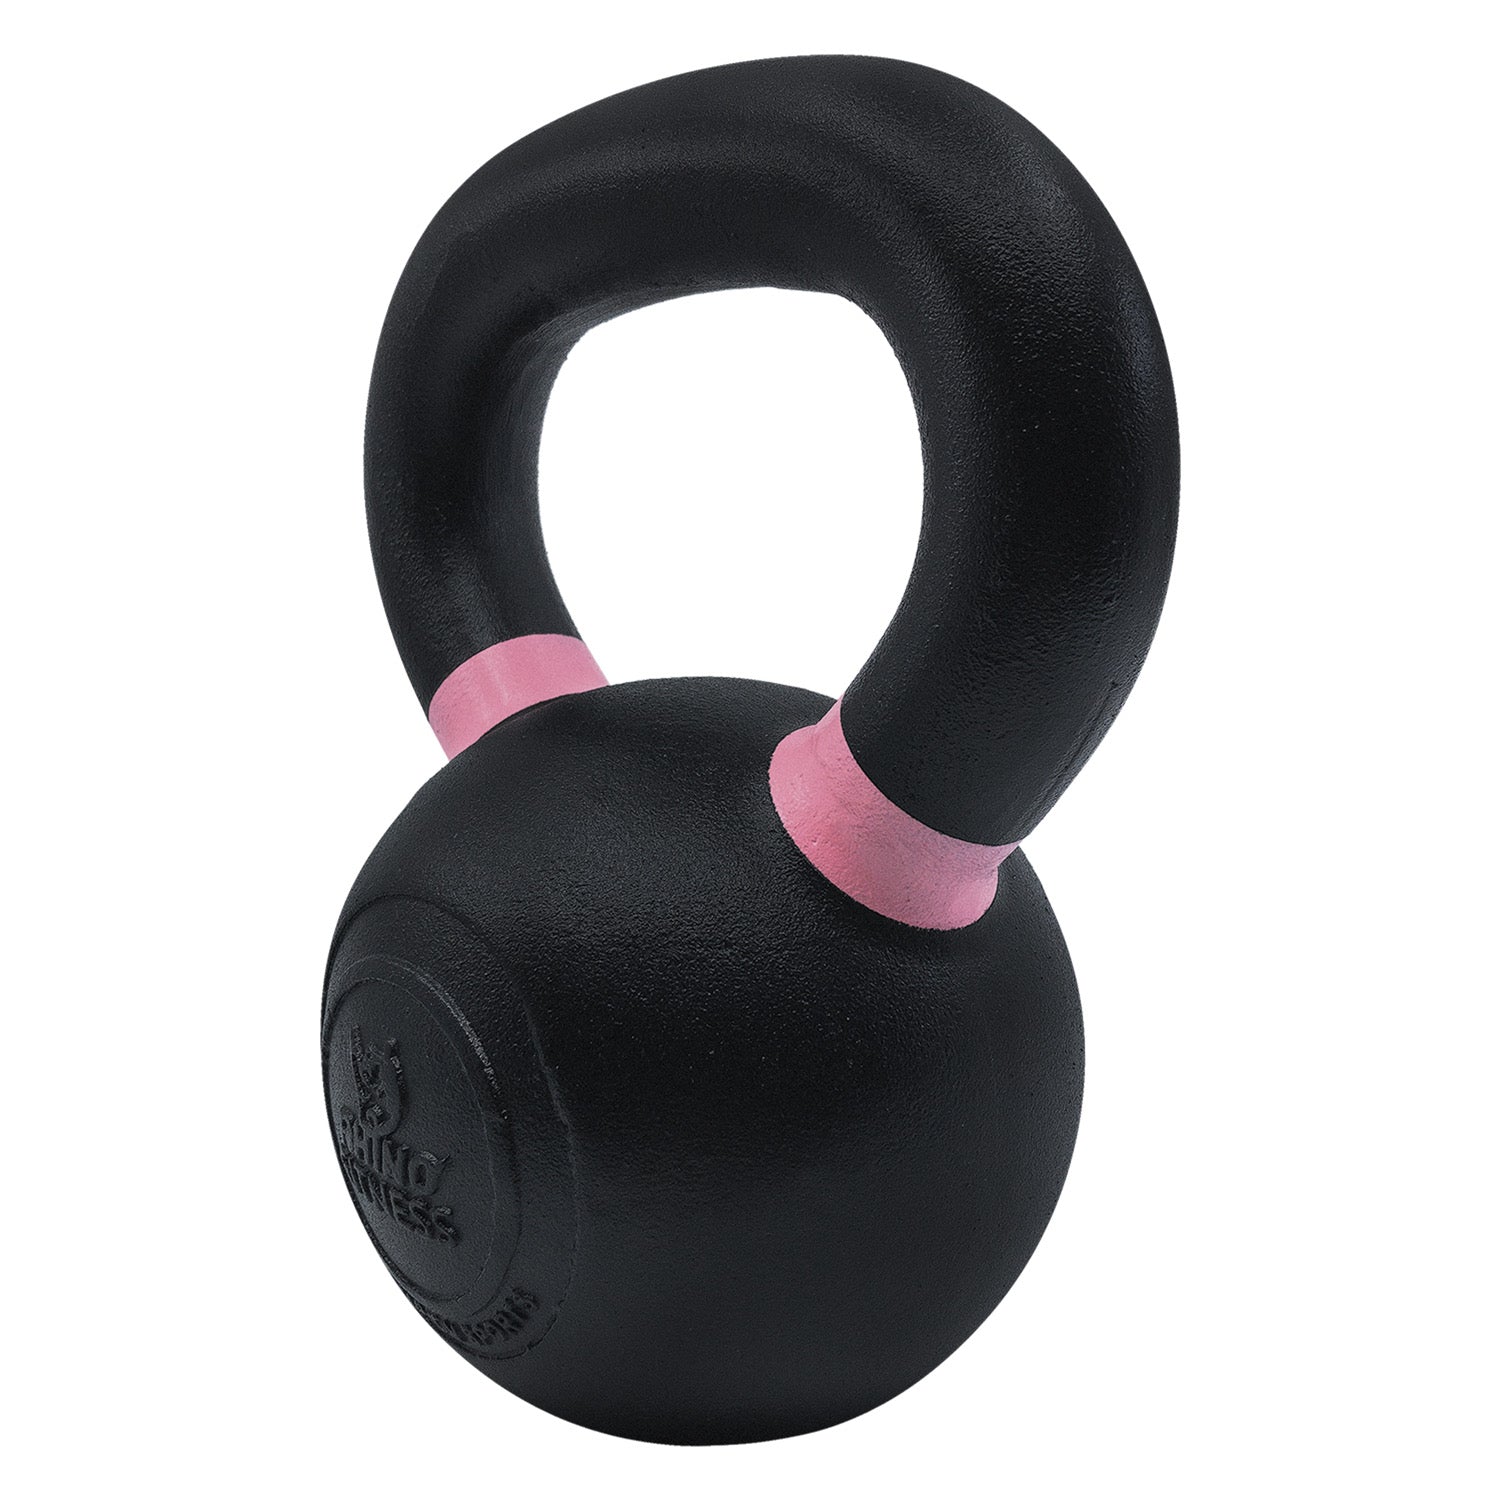 RHINO Fitness® Iron Kettlebell Series 20 lb RHINO Fitness fitness kettlebell Resistance Training